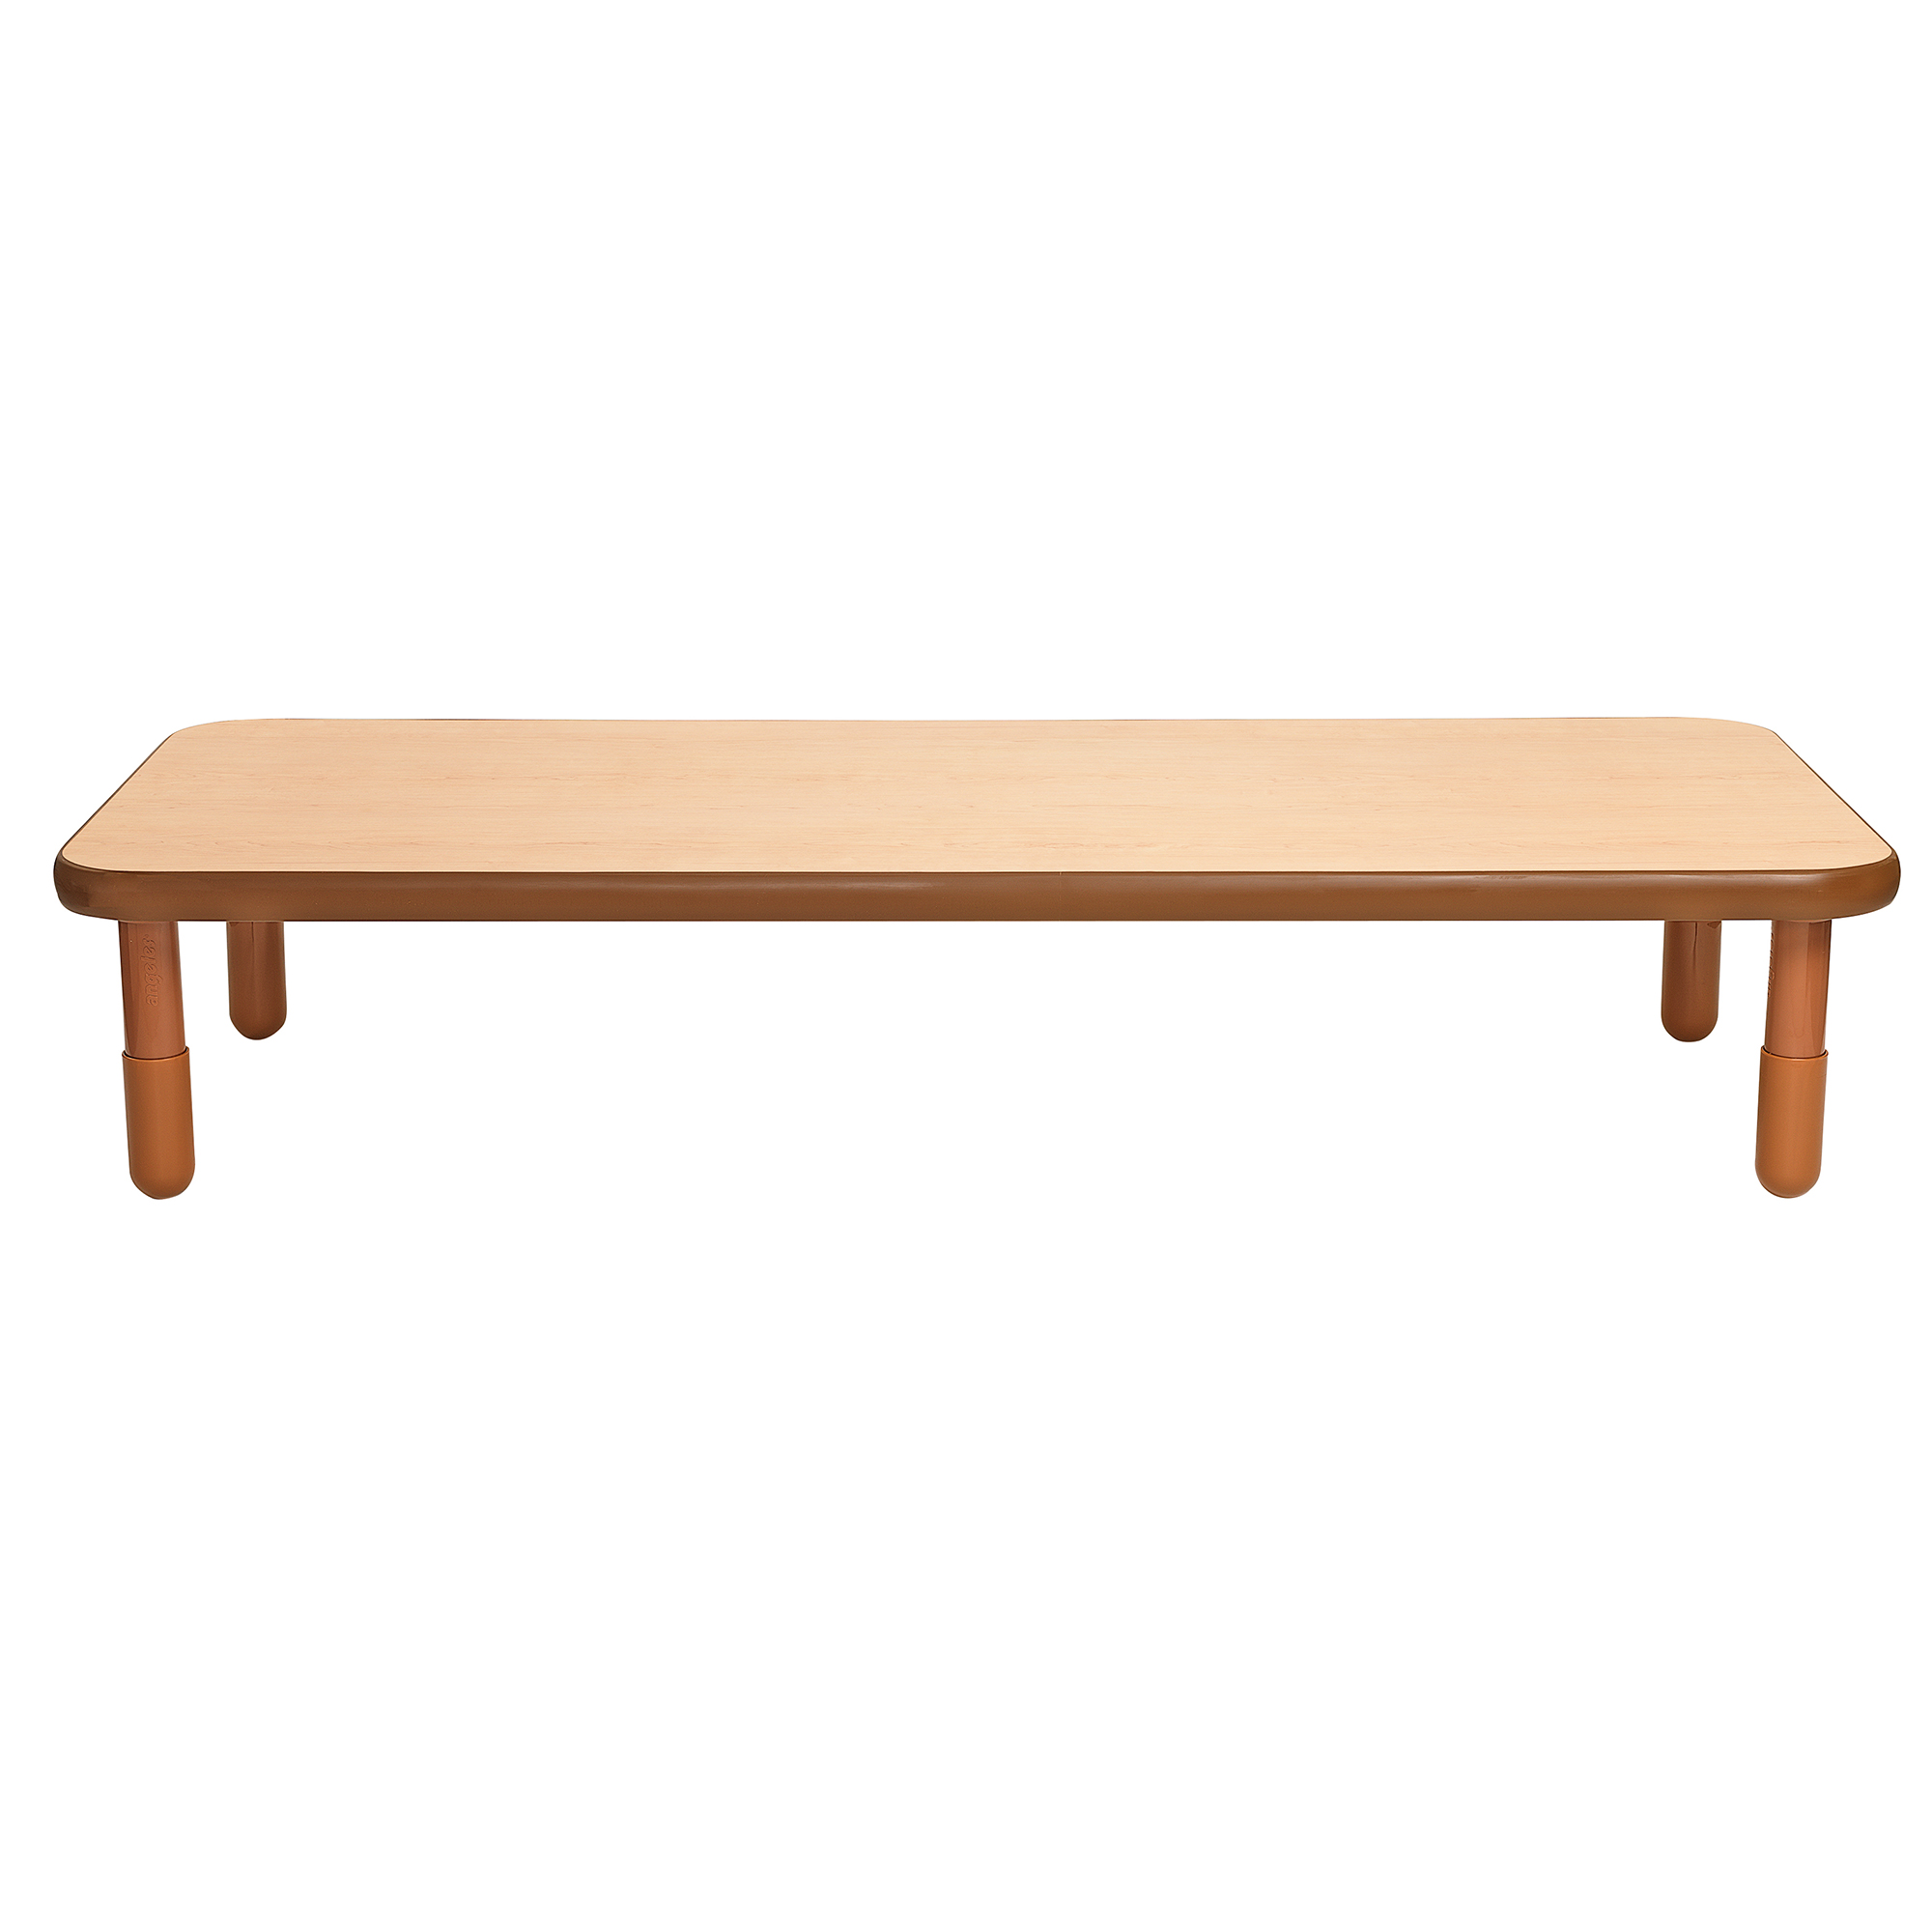 BaseLine® 183 cm  x 76 cm  Rectangular Table - Natural Wood with 35,5 cm  Legs